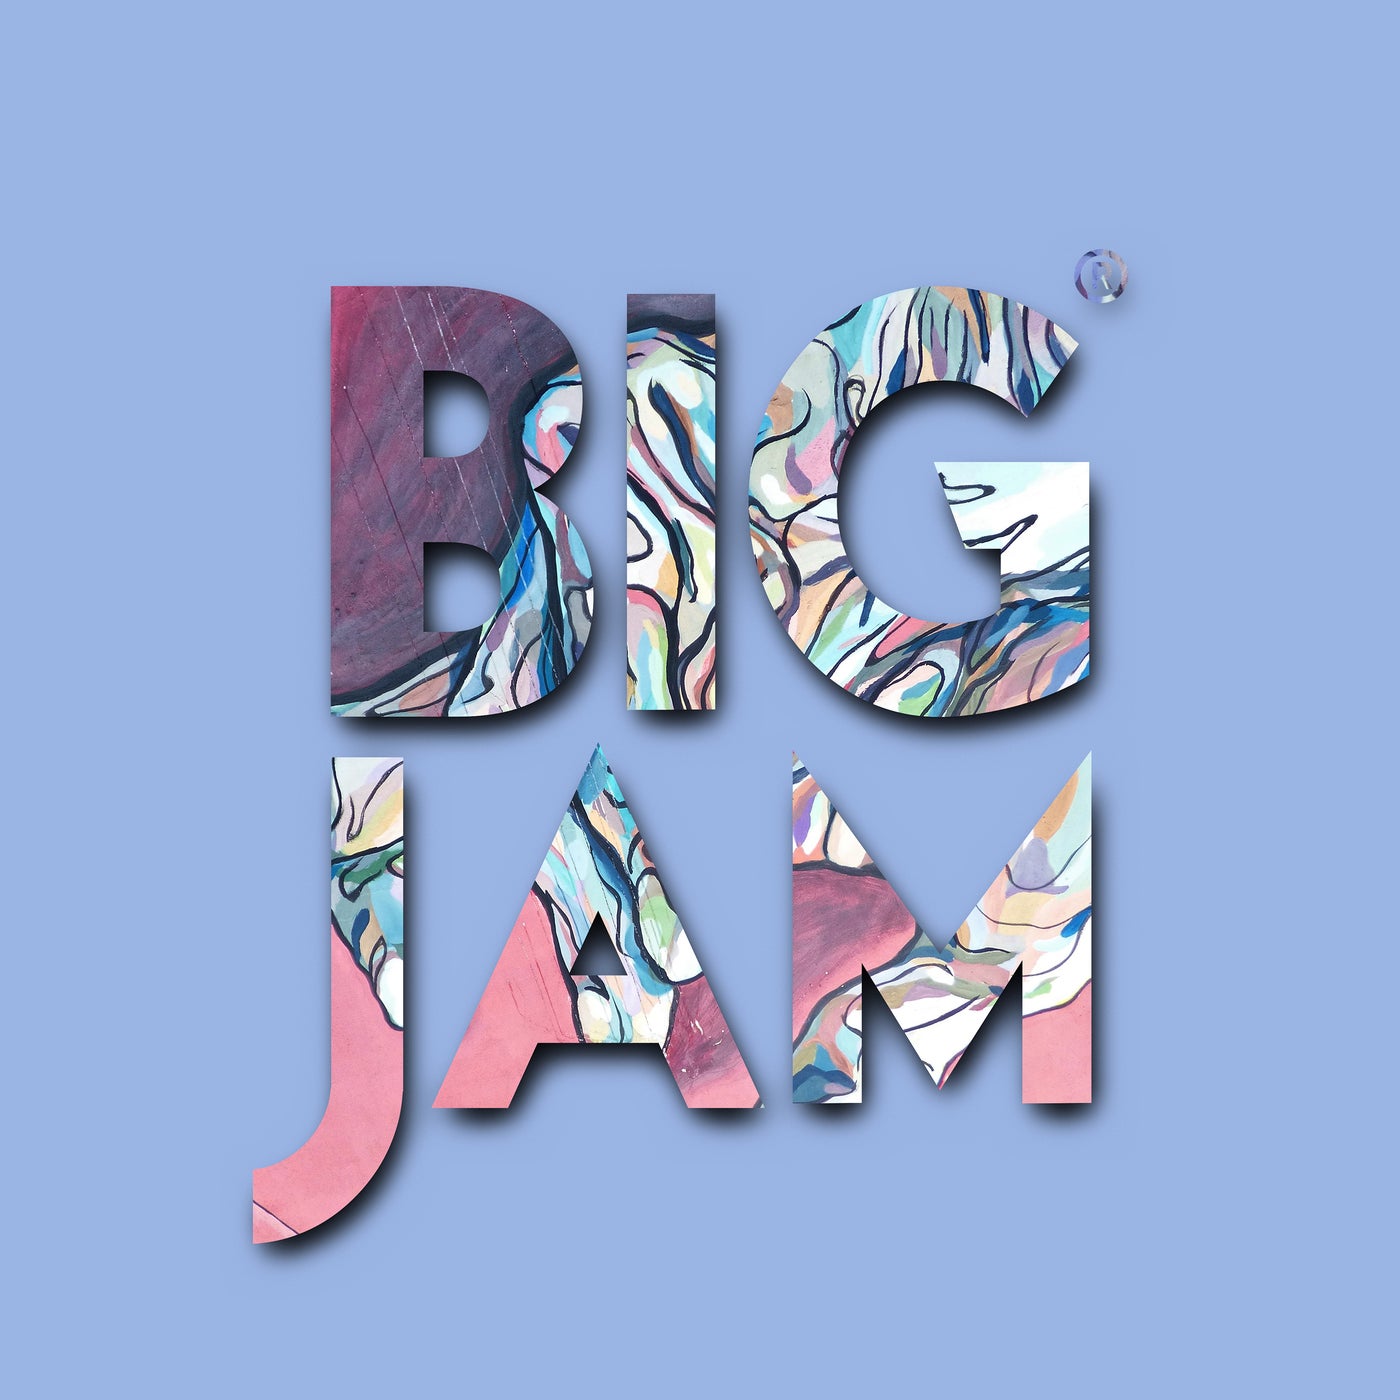 Big Jam (feat. J Dot Manswell) (Release)